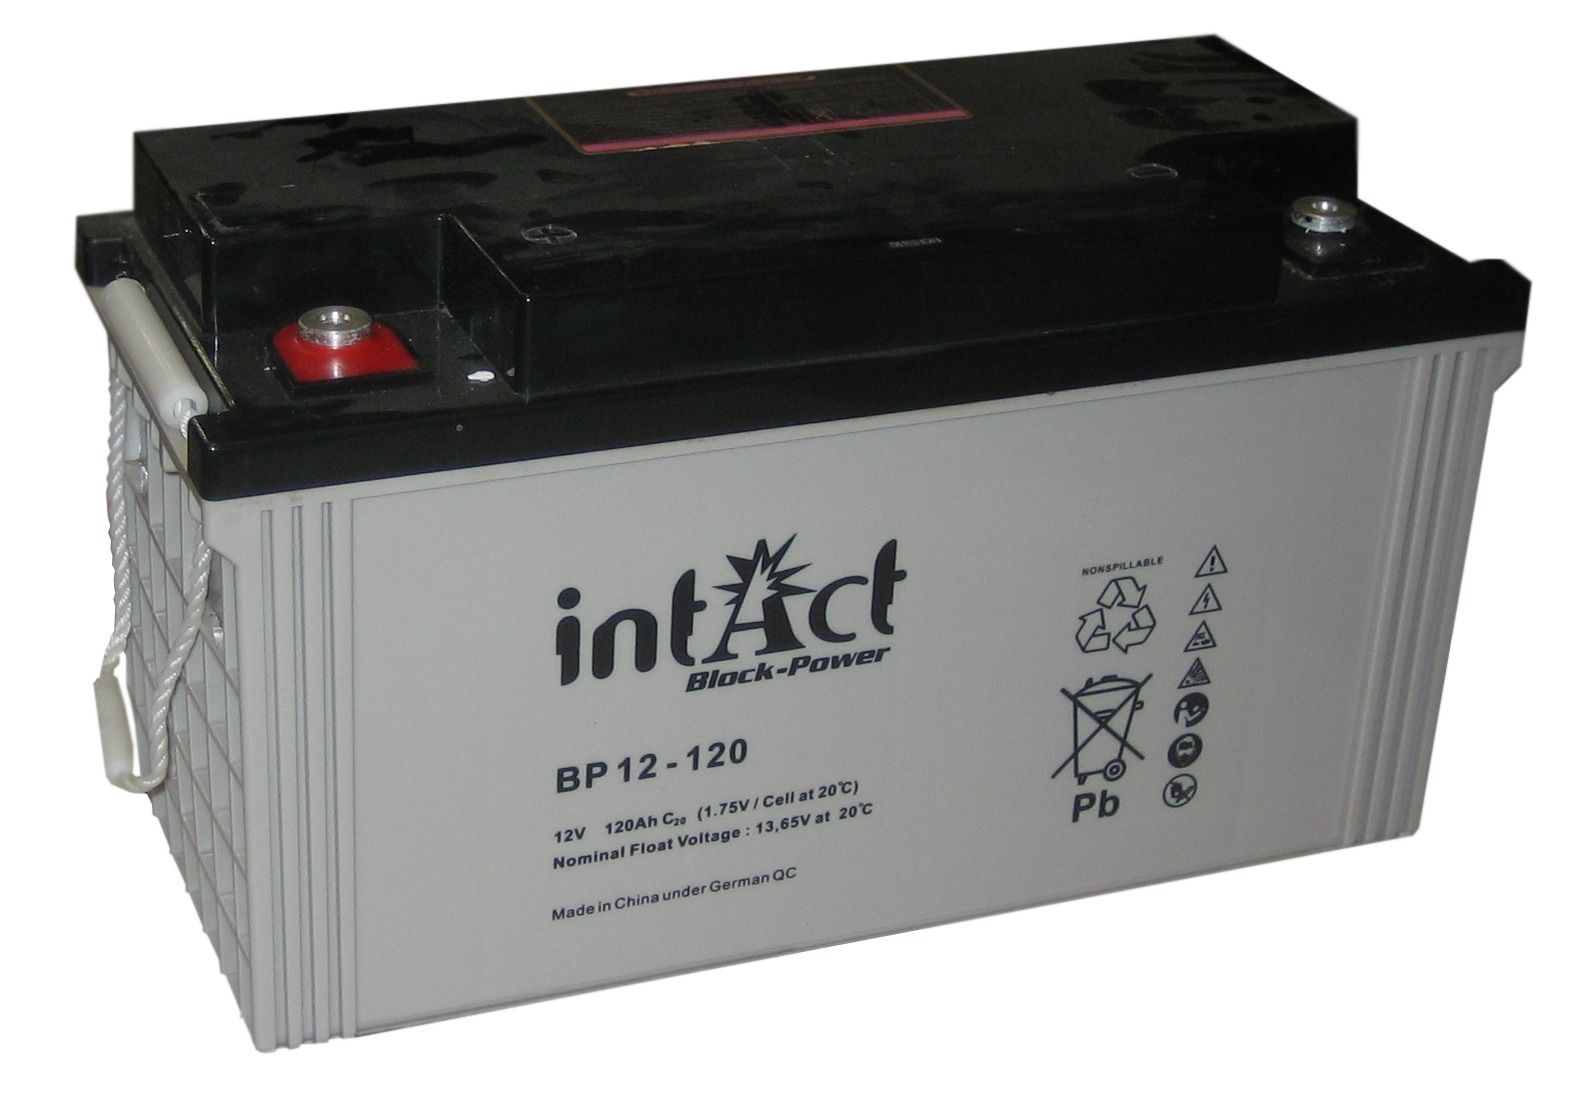 Intact Block-Power 12 V 120Ah (c10) 408x177x225 1/F-M8